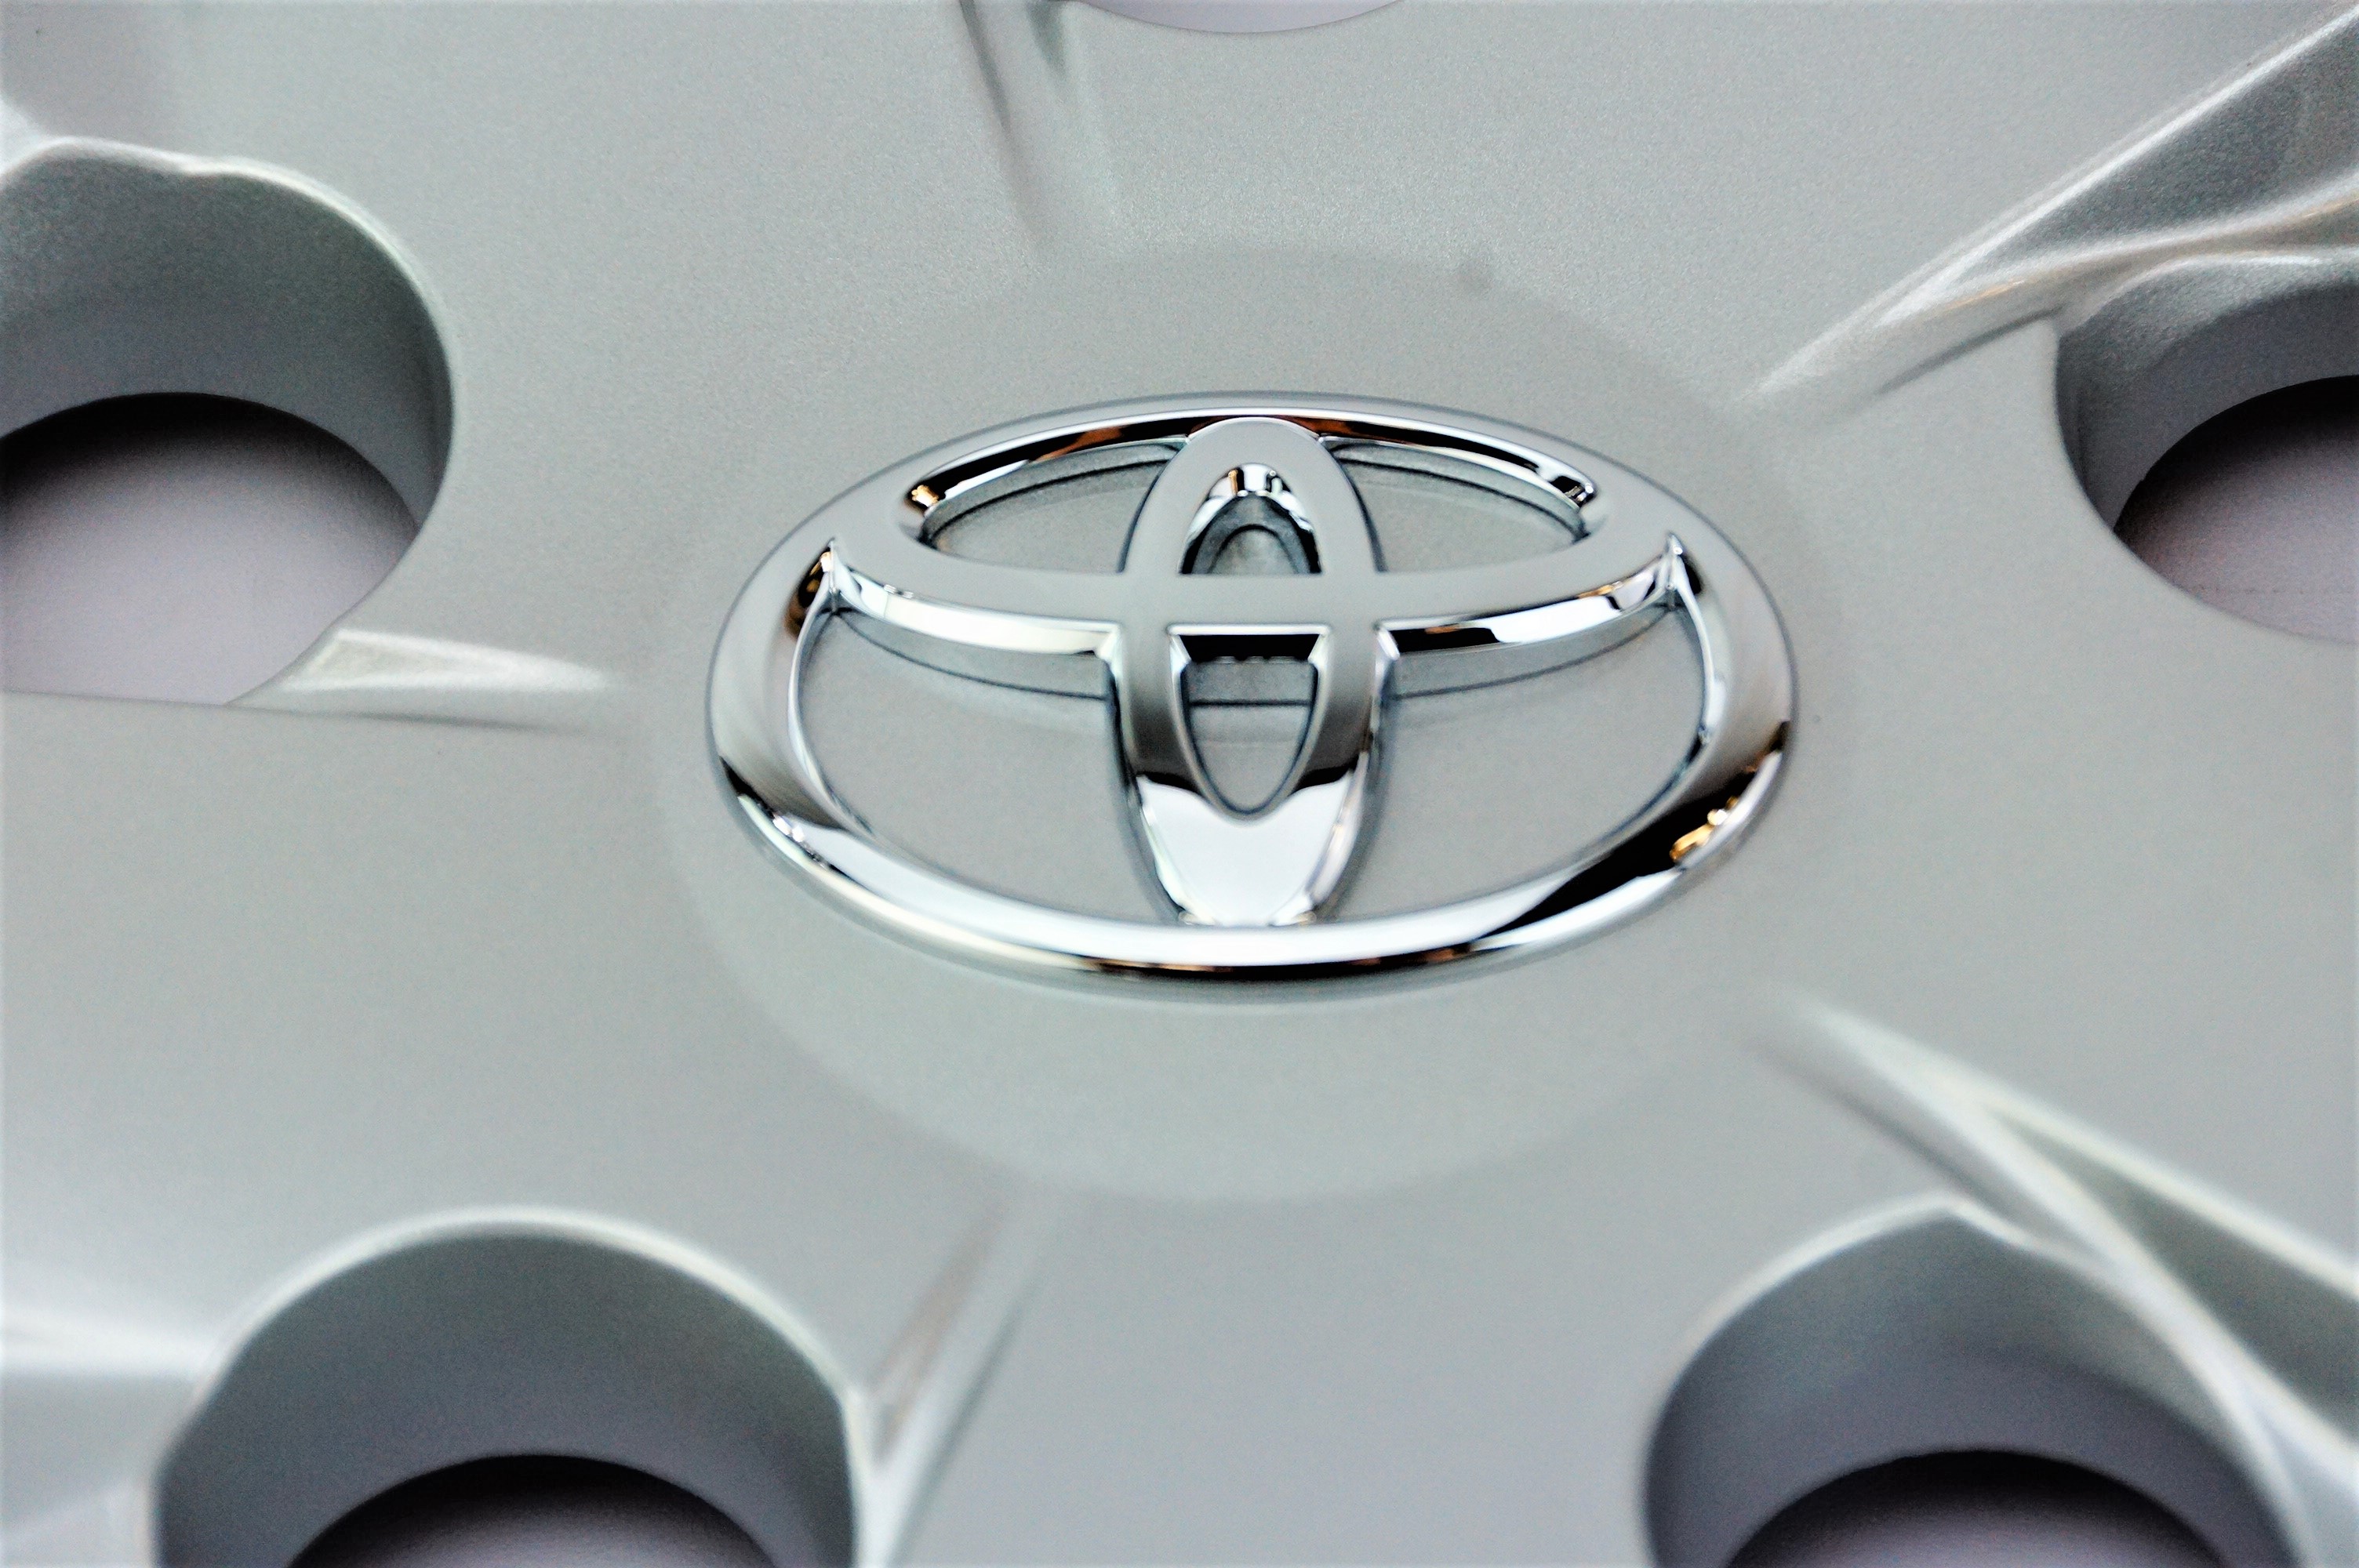 Genuine OEM 42602-47090 Toyota Wheel Cover Hub Cap 2012-2014 Prius V - image 2